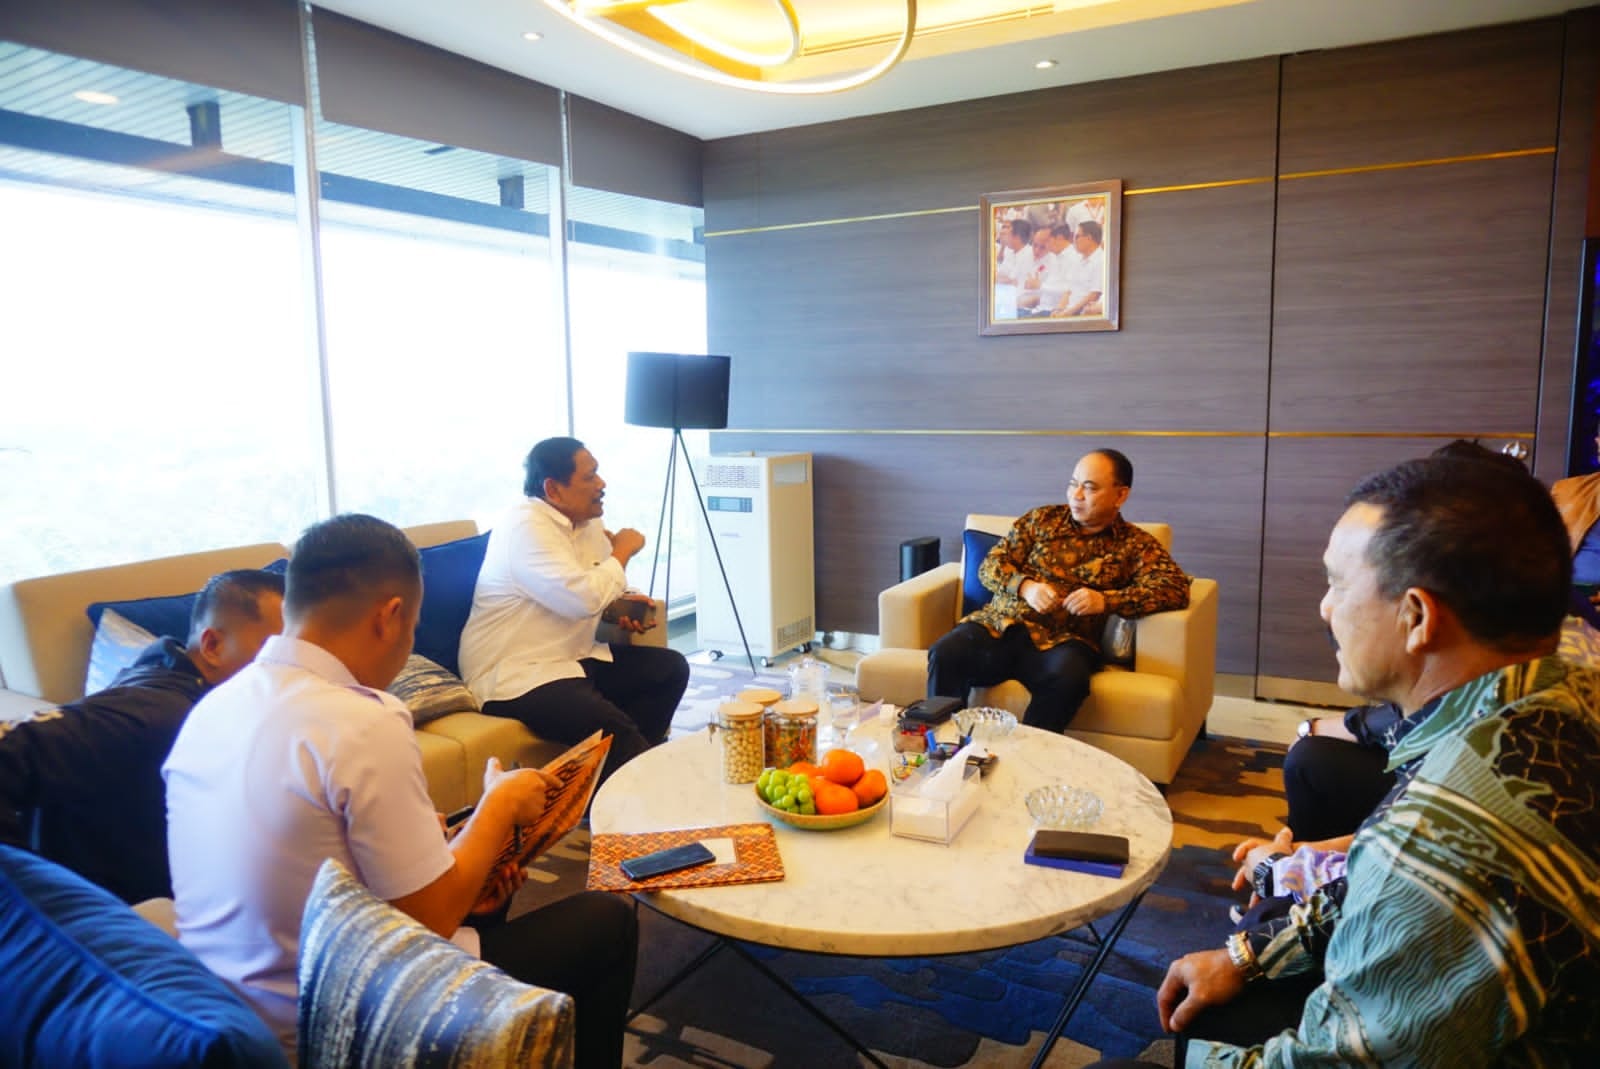 Bupati Bengkulu Utara Curhat Soal Blank Spot dan Sinyal Internet yang Lemot ke Menteri Kominfo